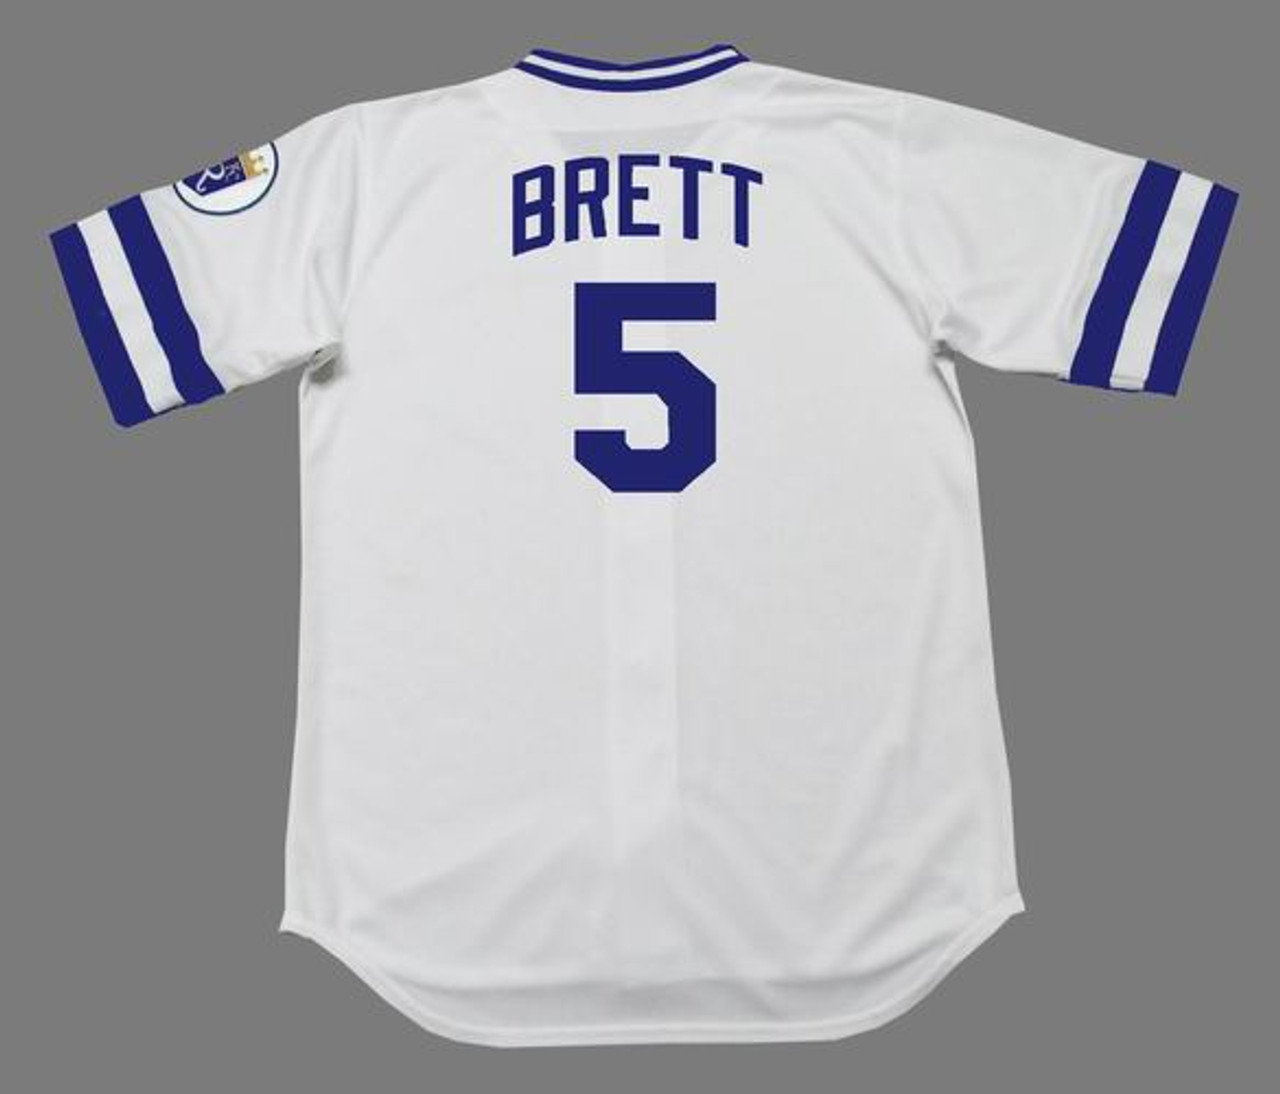 Official George Brett Jersey, George Brett Shirts, Baseball Apparel